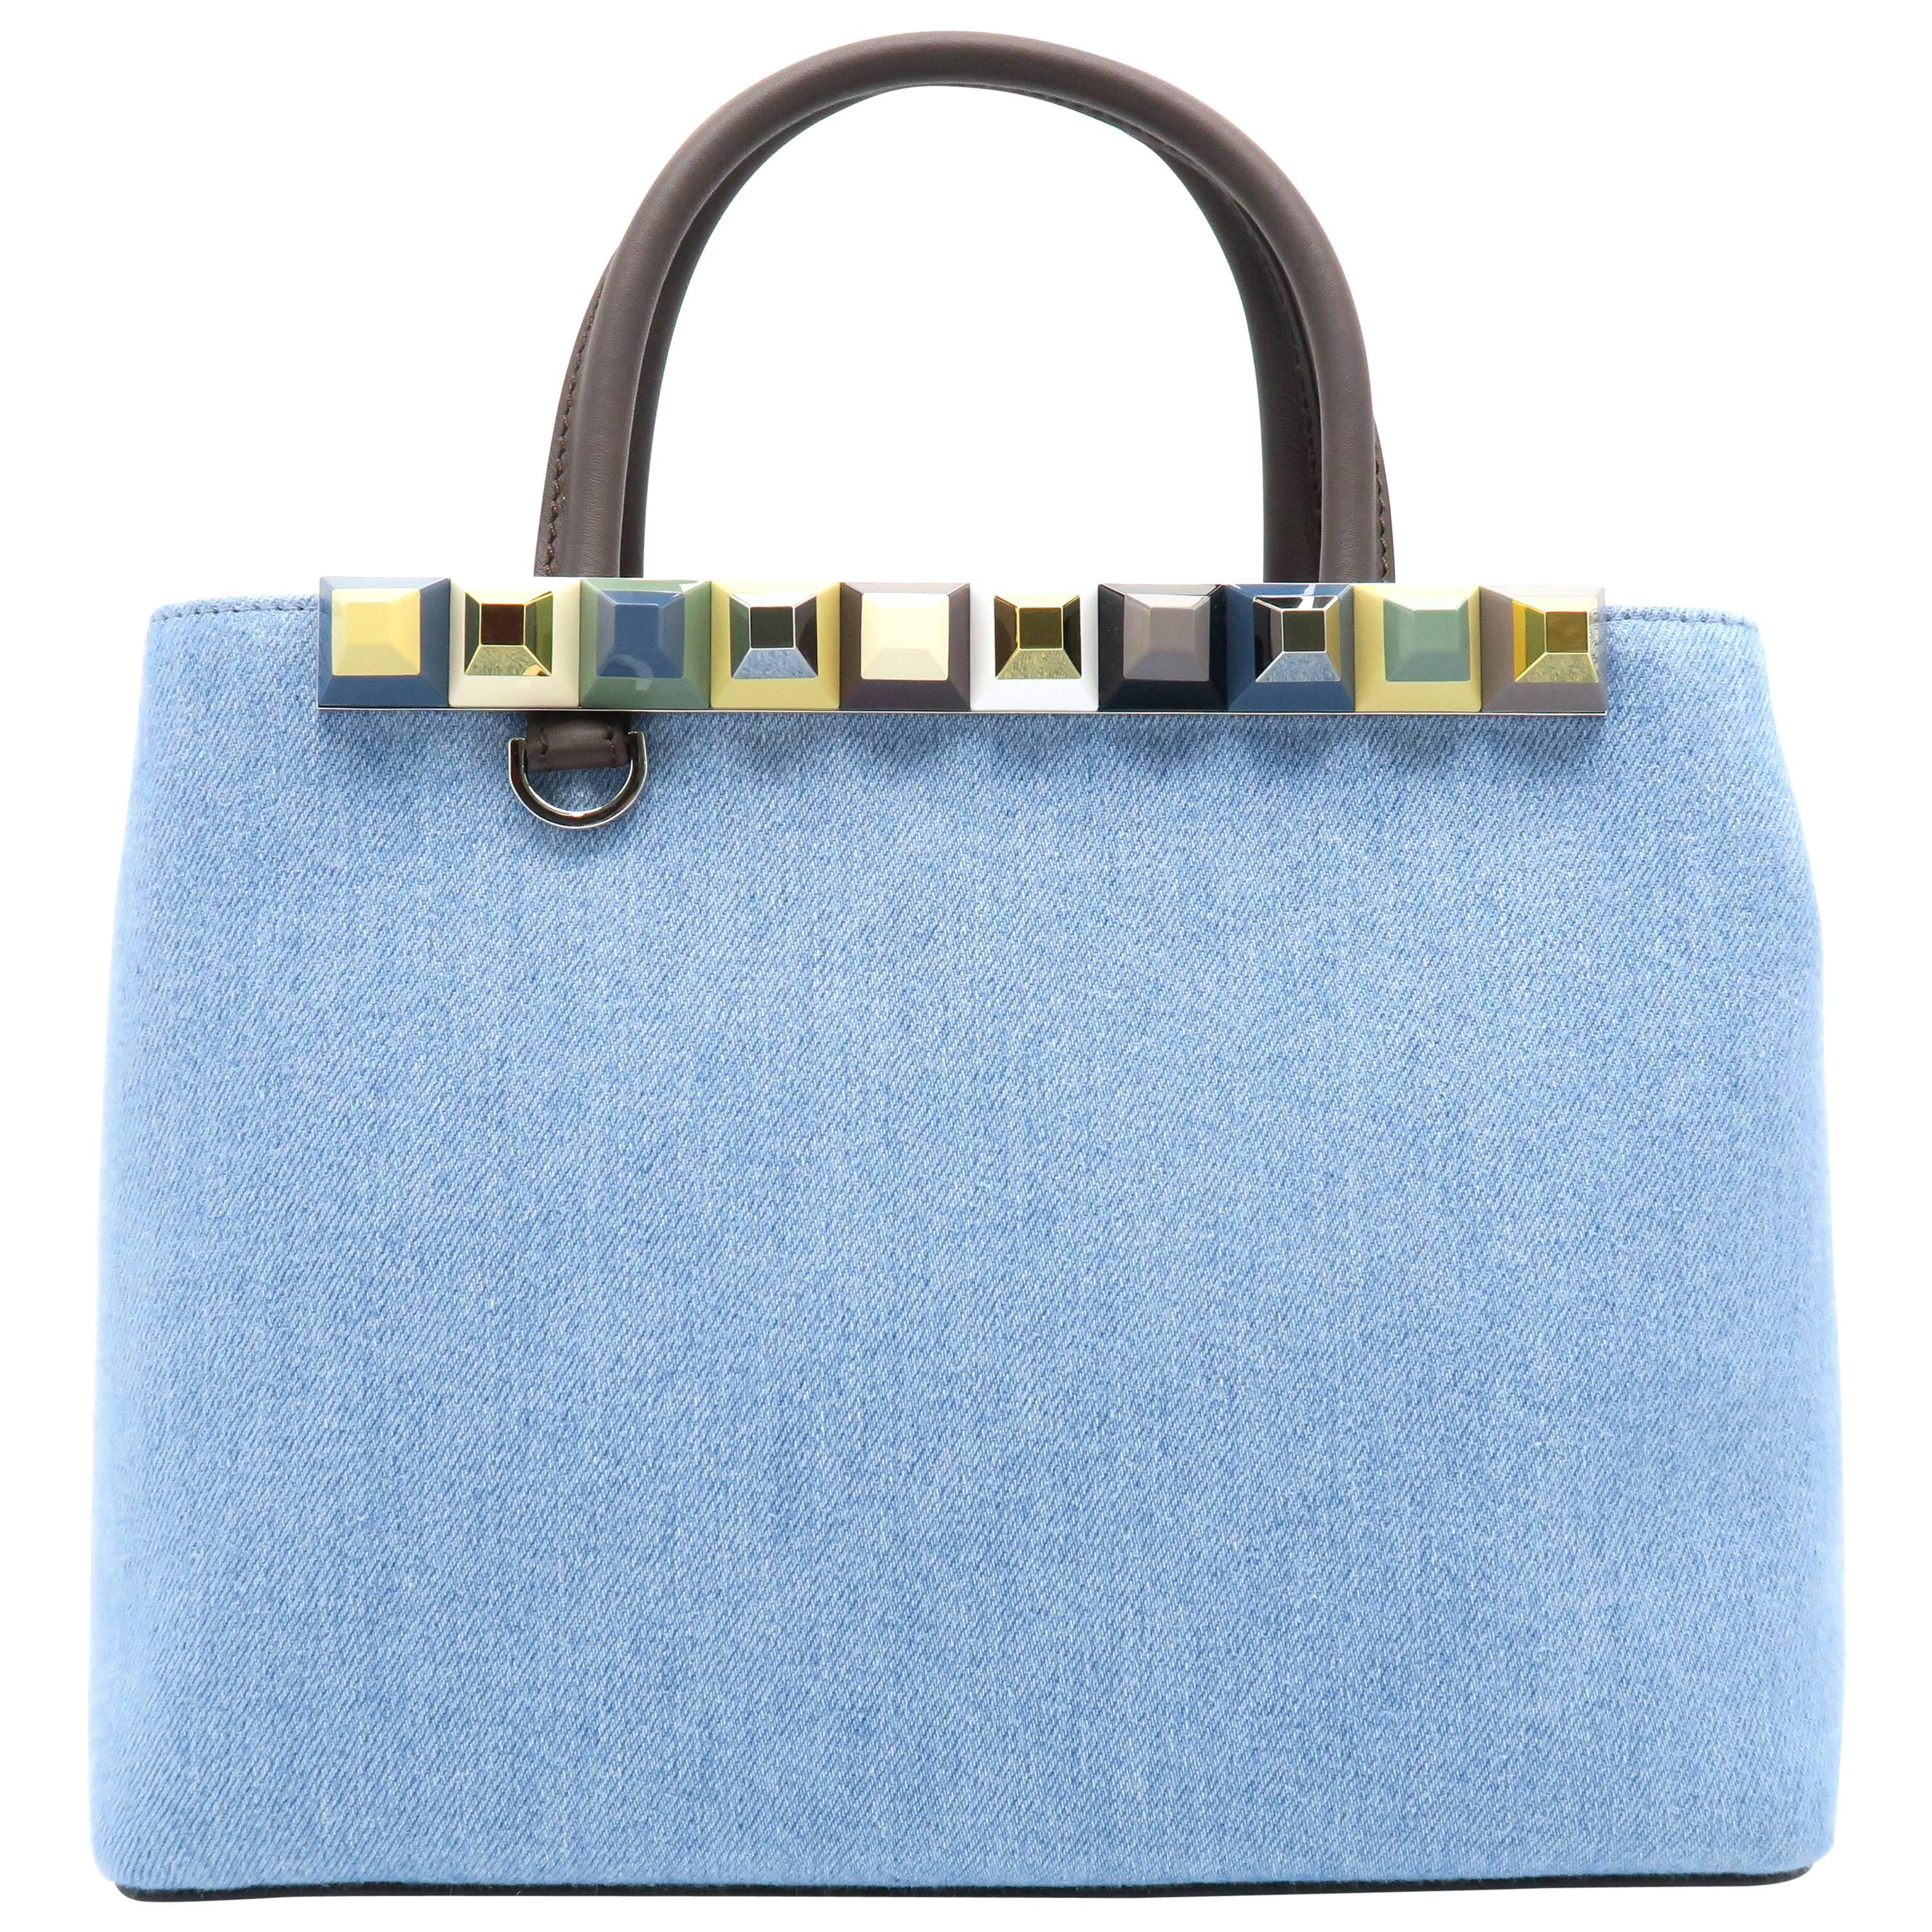 Fendi Petite 2Jours Blue/ Brown/ Multicolor Denim Studded Satchel Bag For Sale